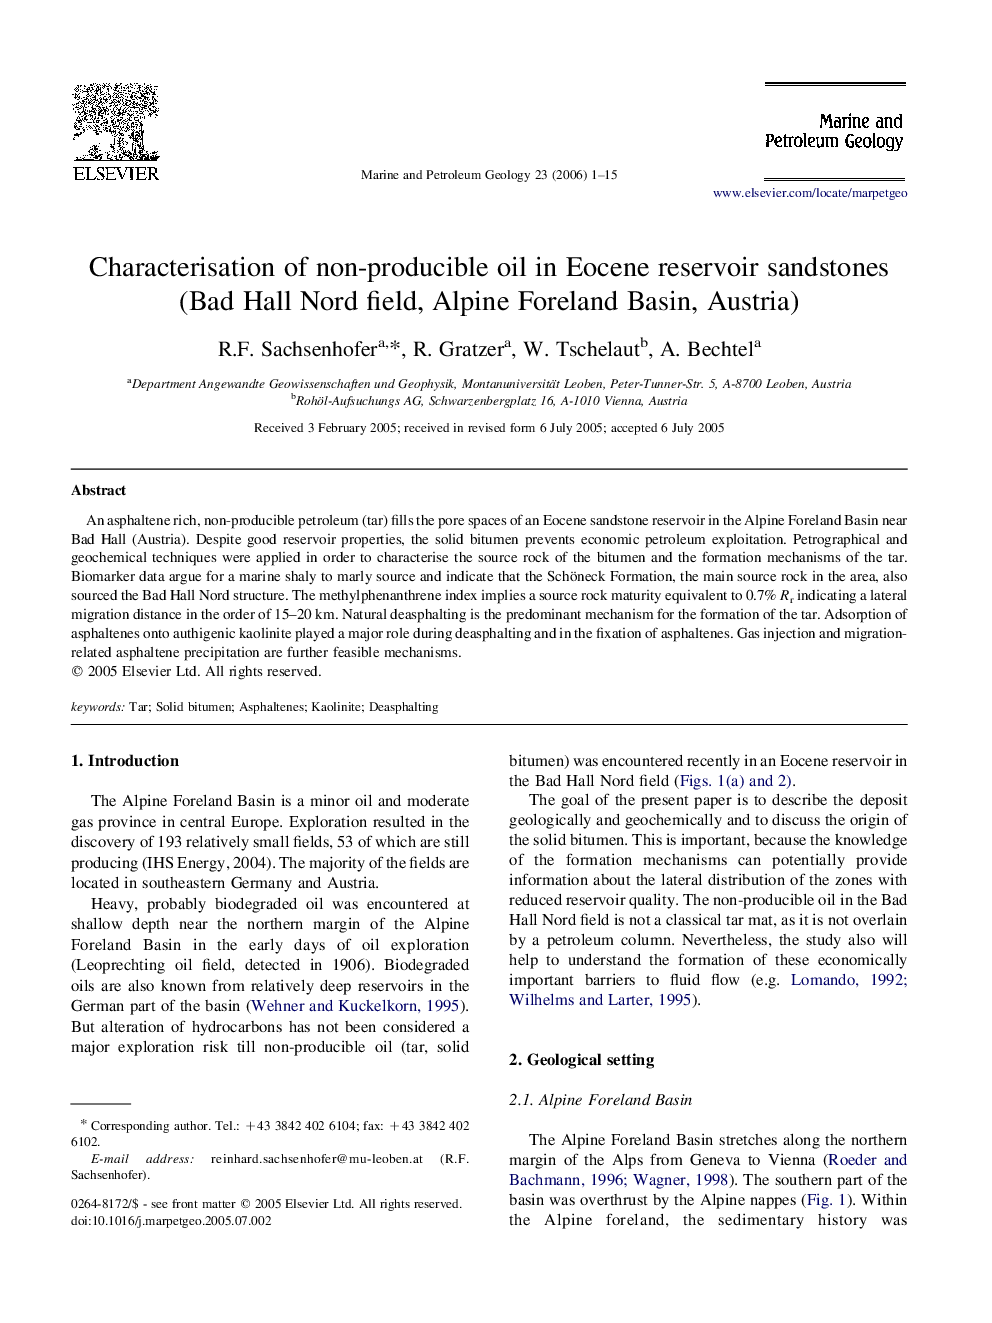 Characterisation of non-producible oil in Eocene reservoir sandstones (Bad Hall Nord field, Alpine Foreland Basin, Austria)